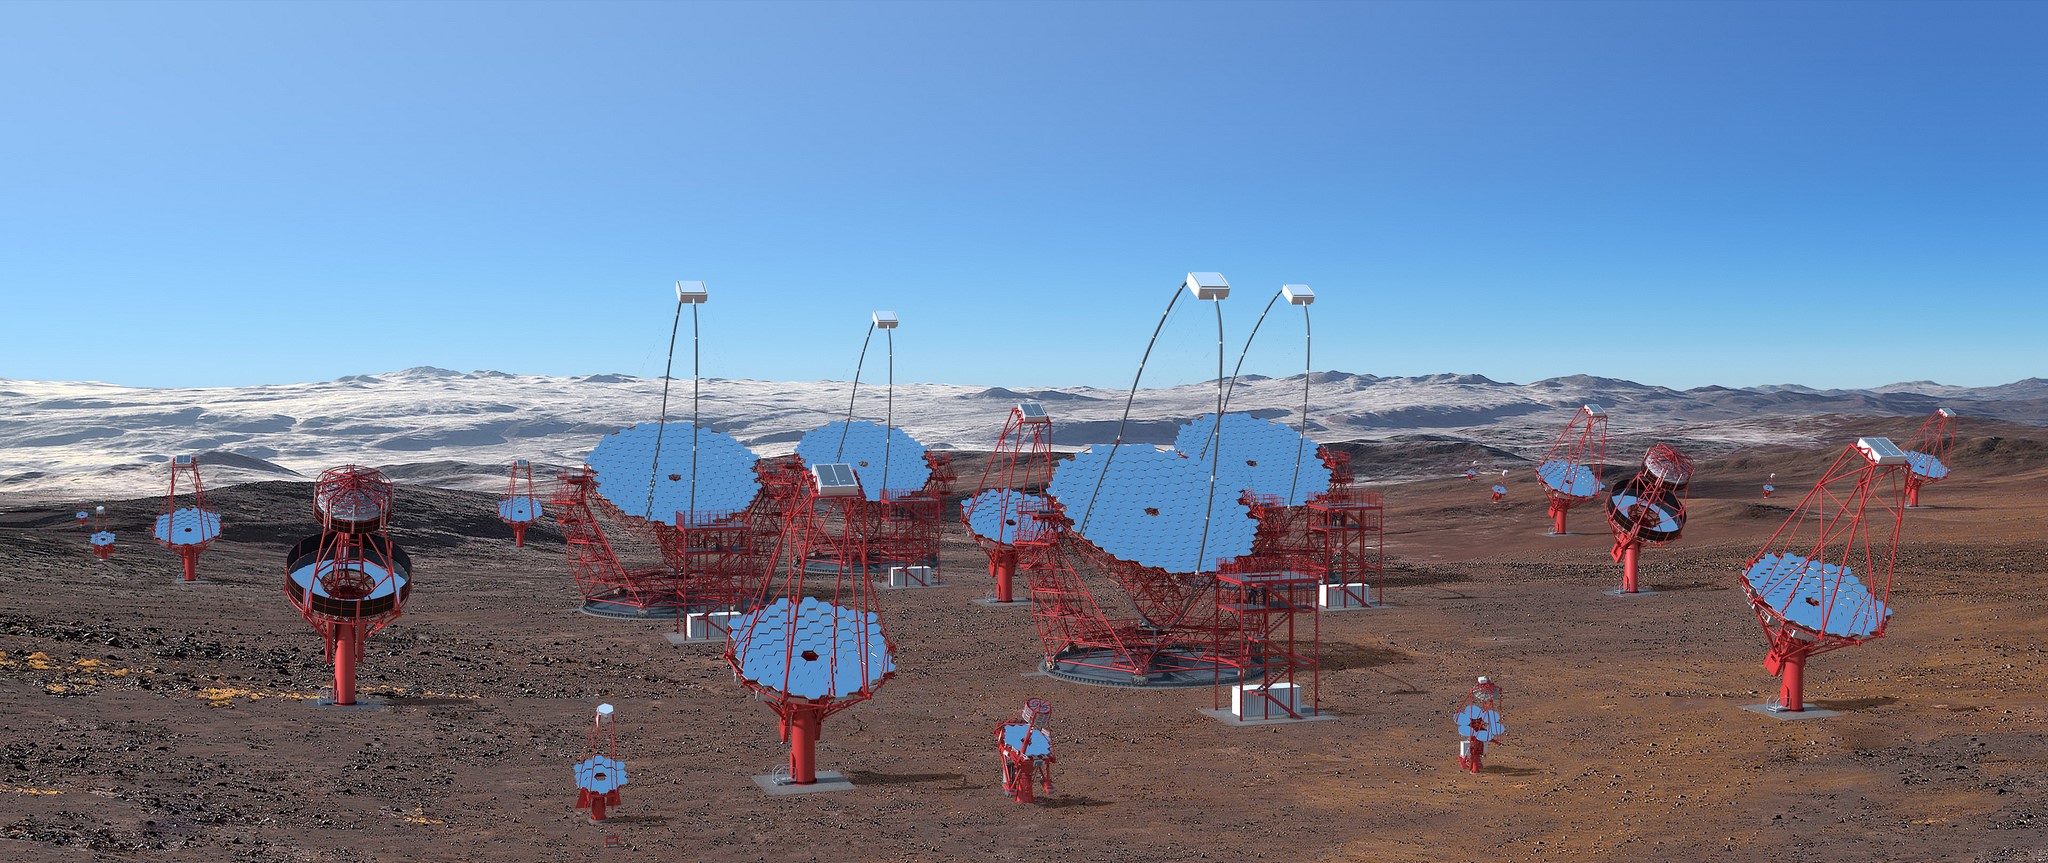 telescope array in the Atacama